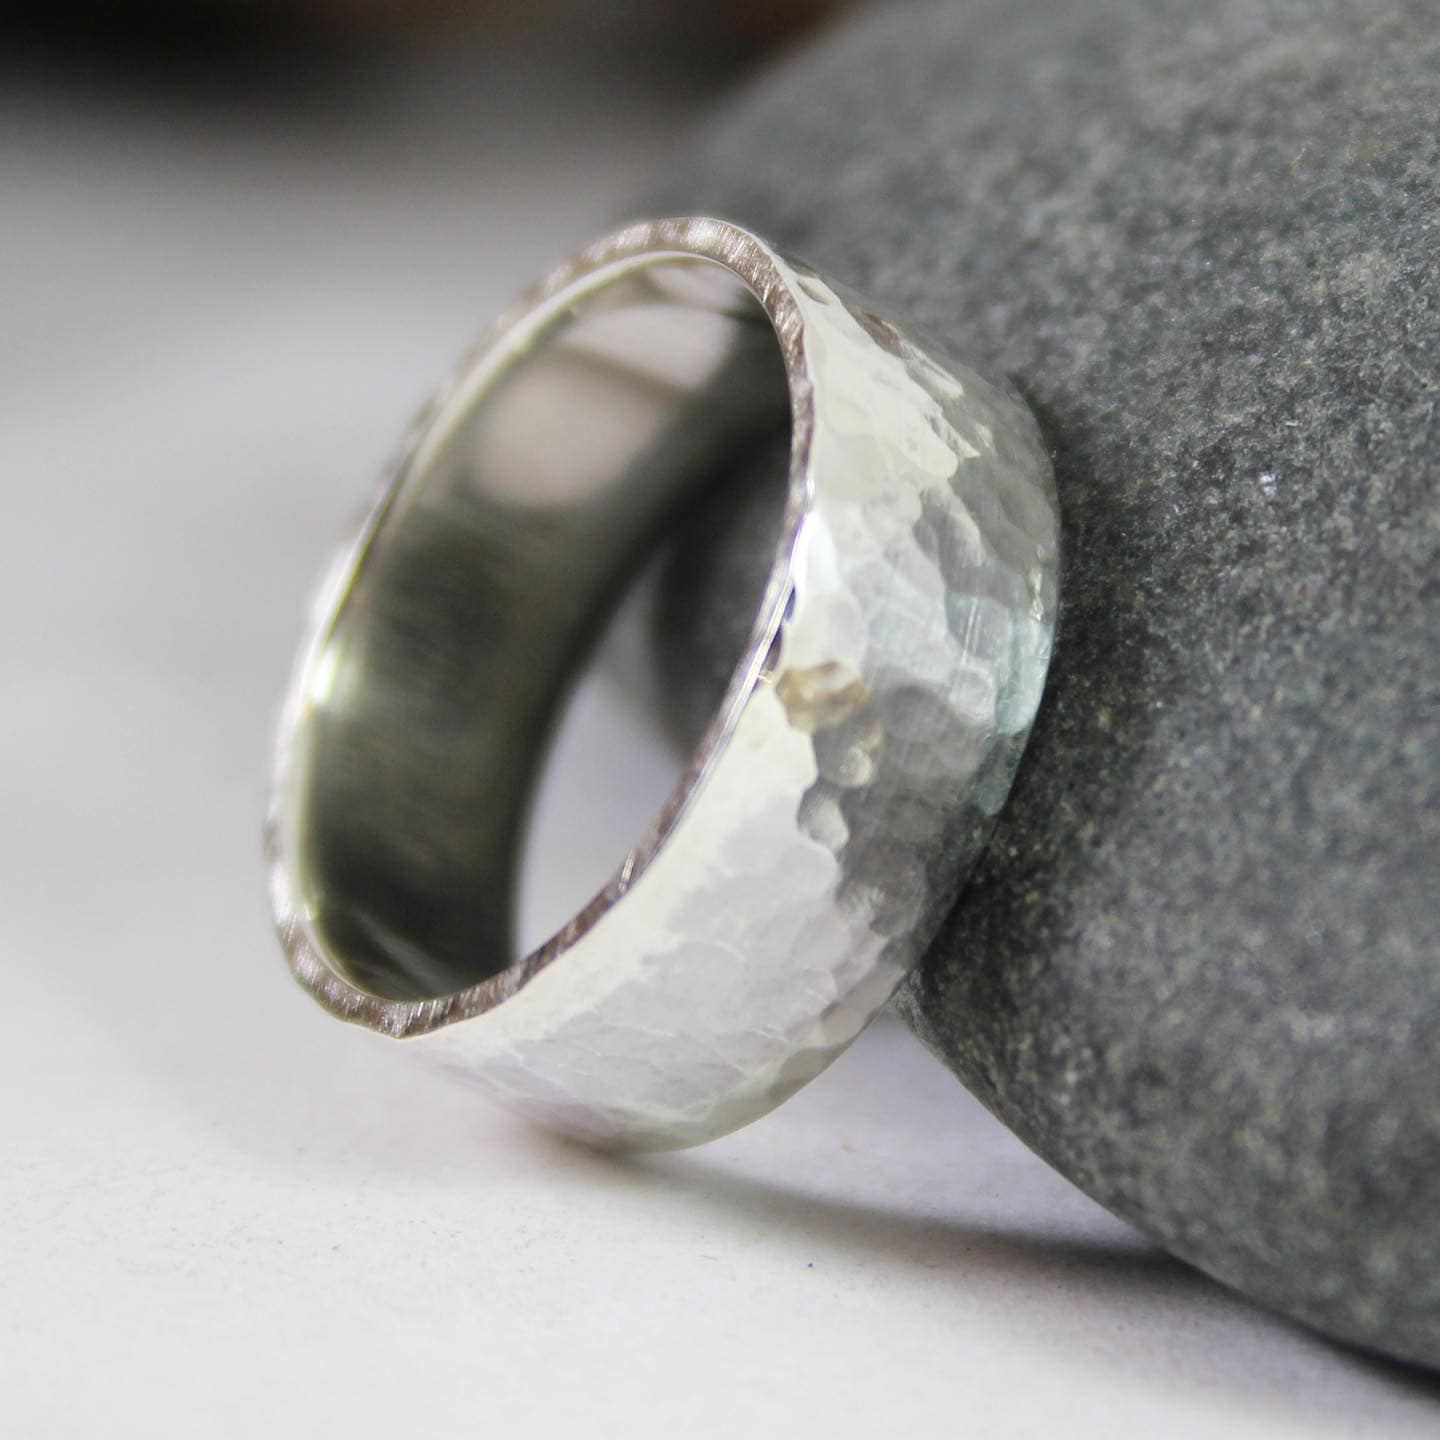 Silversmithing Workshop: Make Your Own Silver Ring